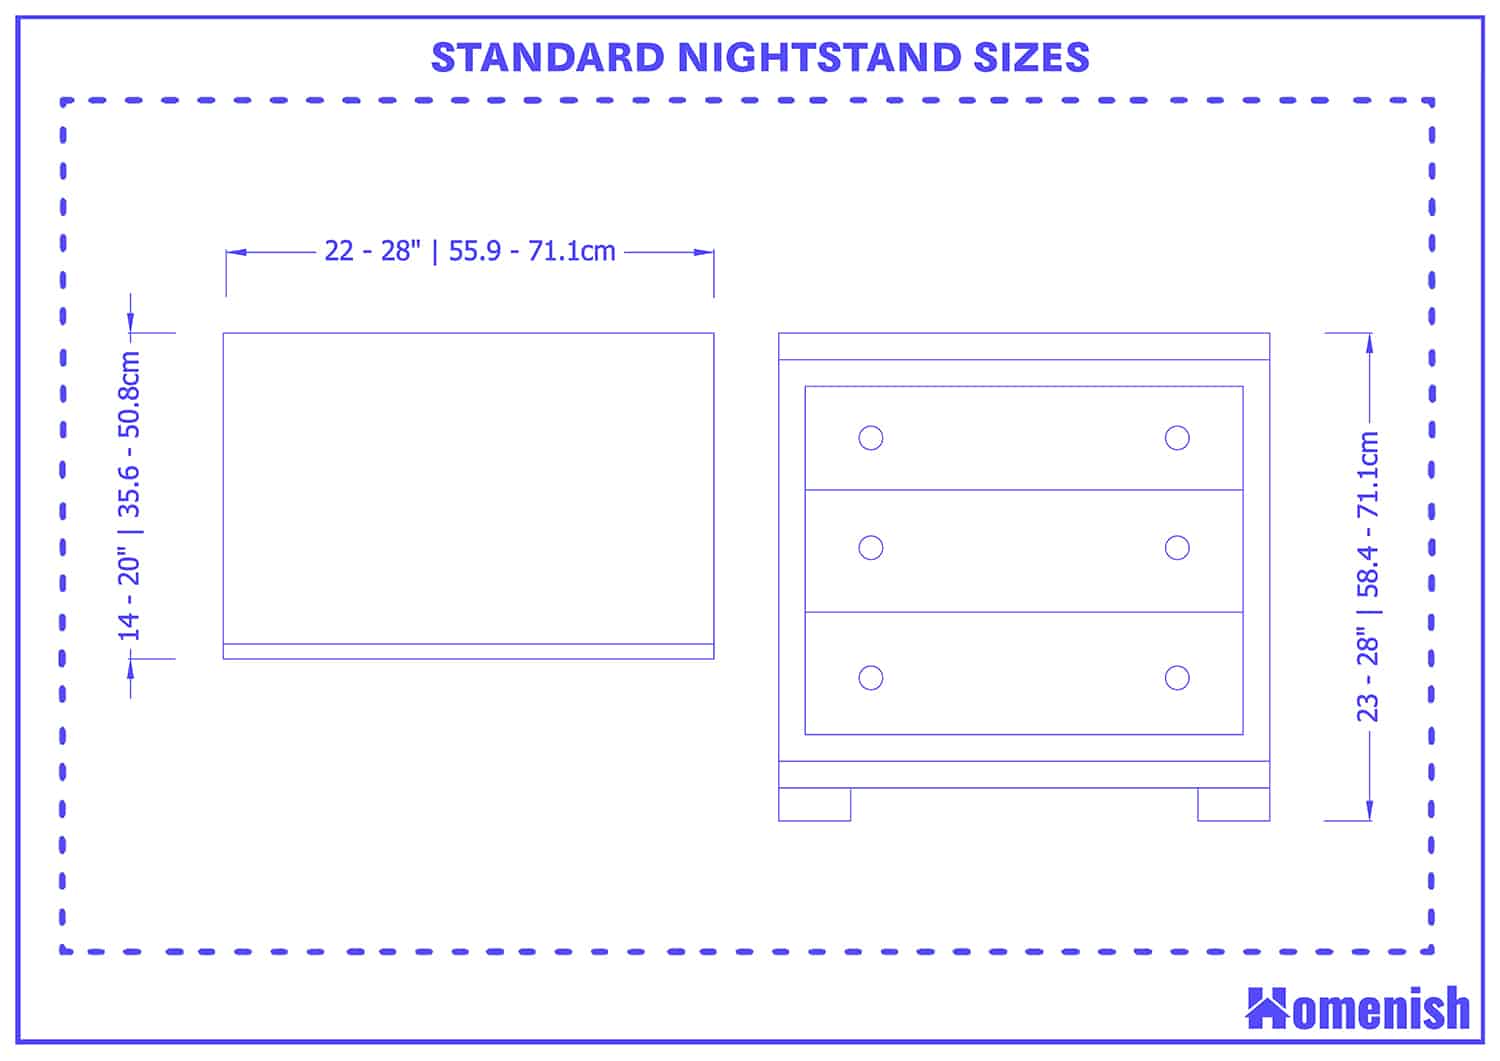 Standard nightstand sizes